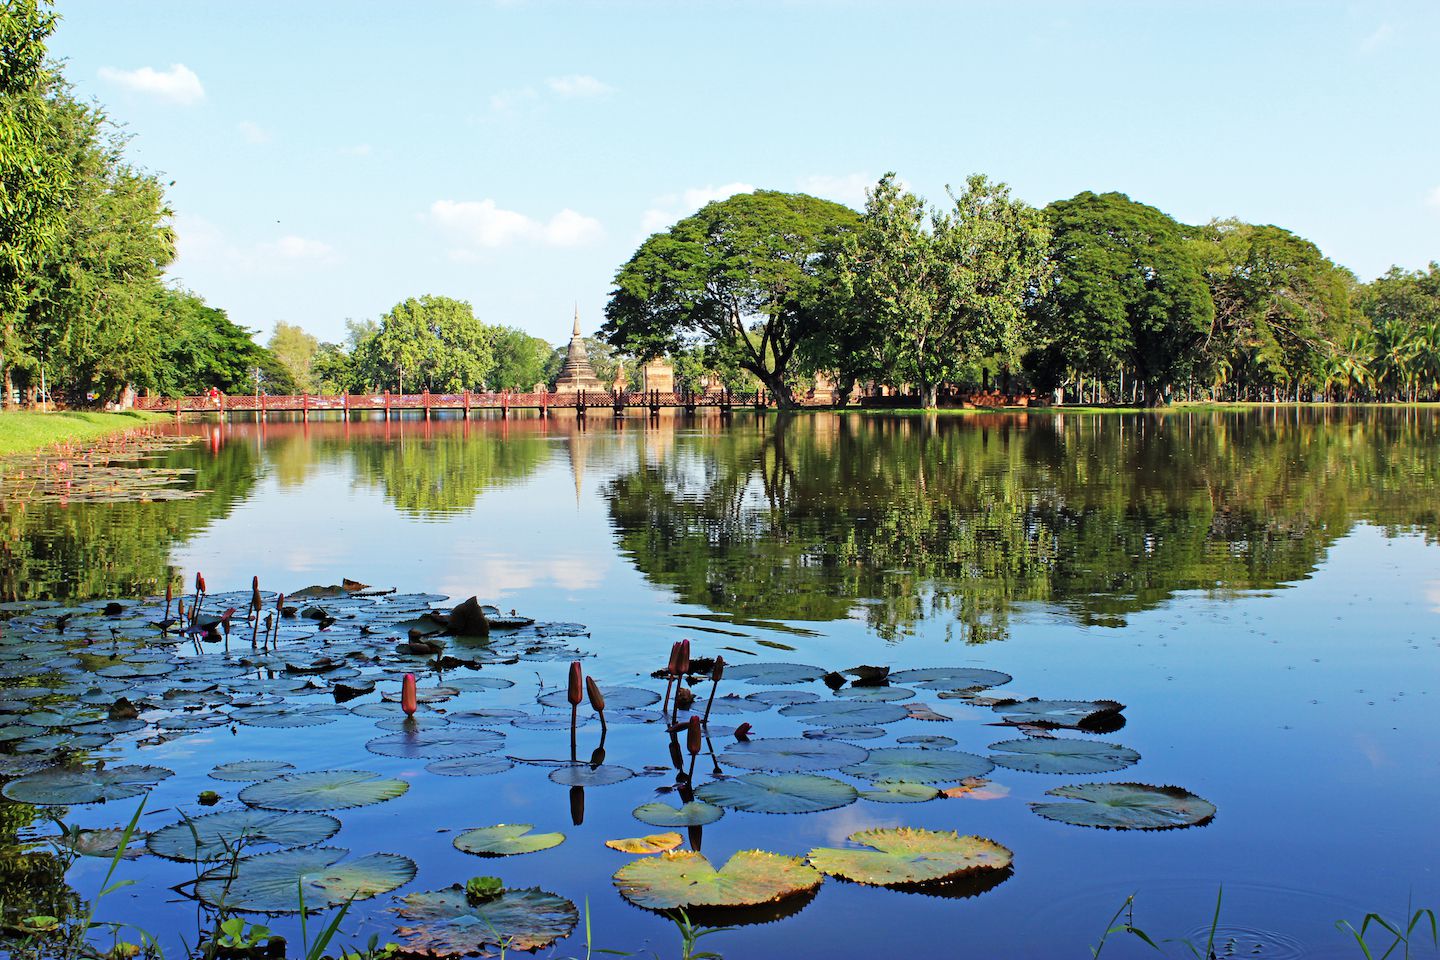 Pond of Wat Tra Phang Ngoen in Sukhothai